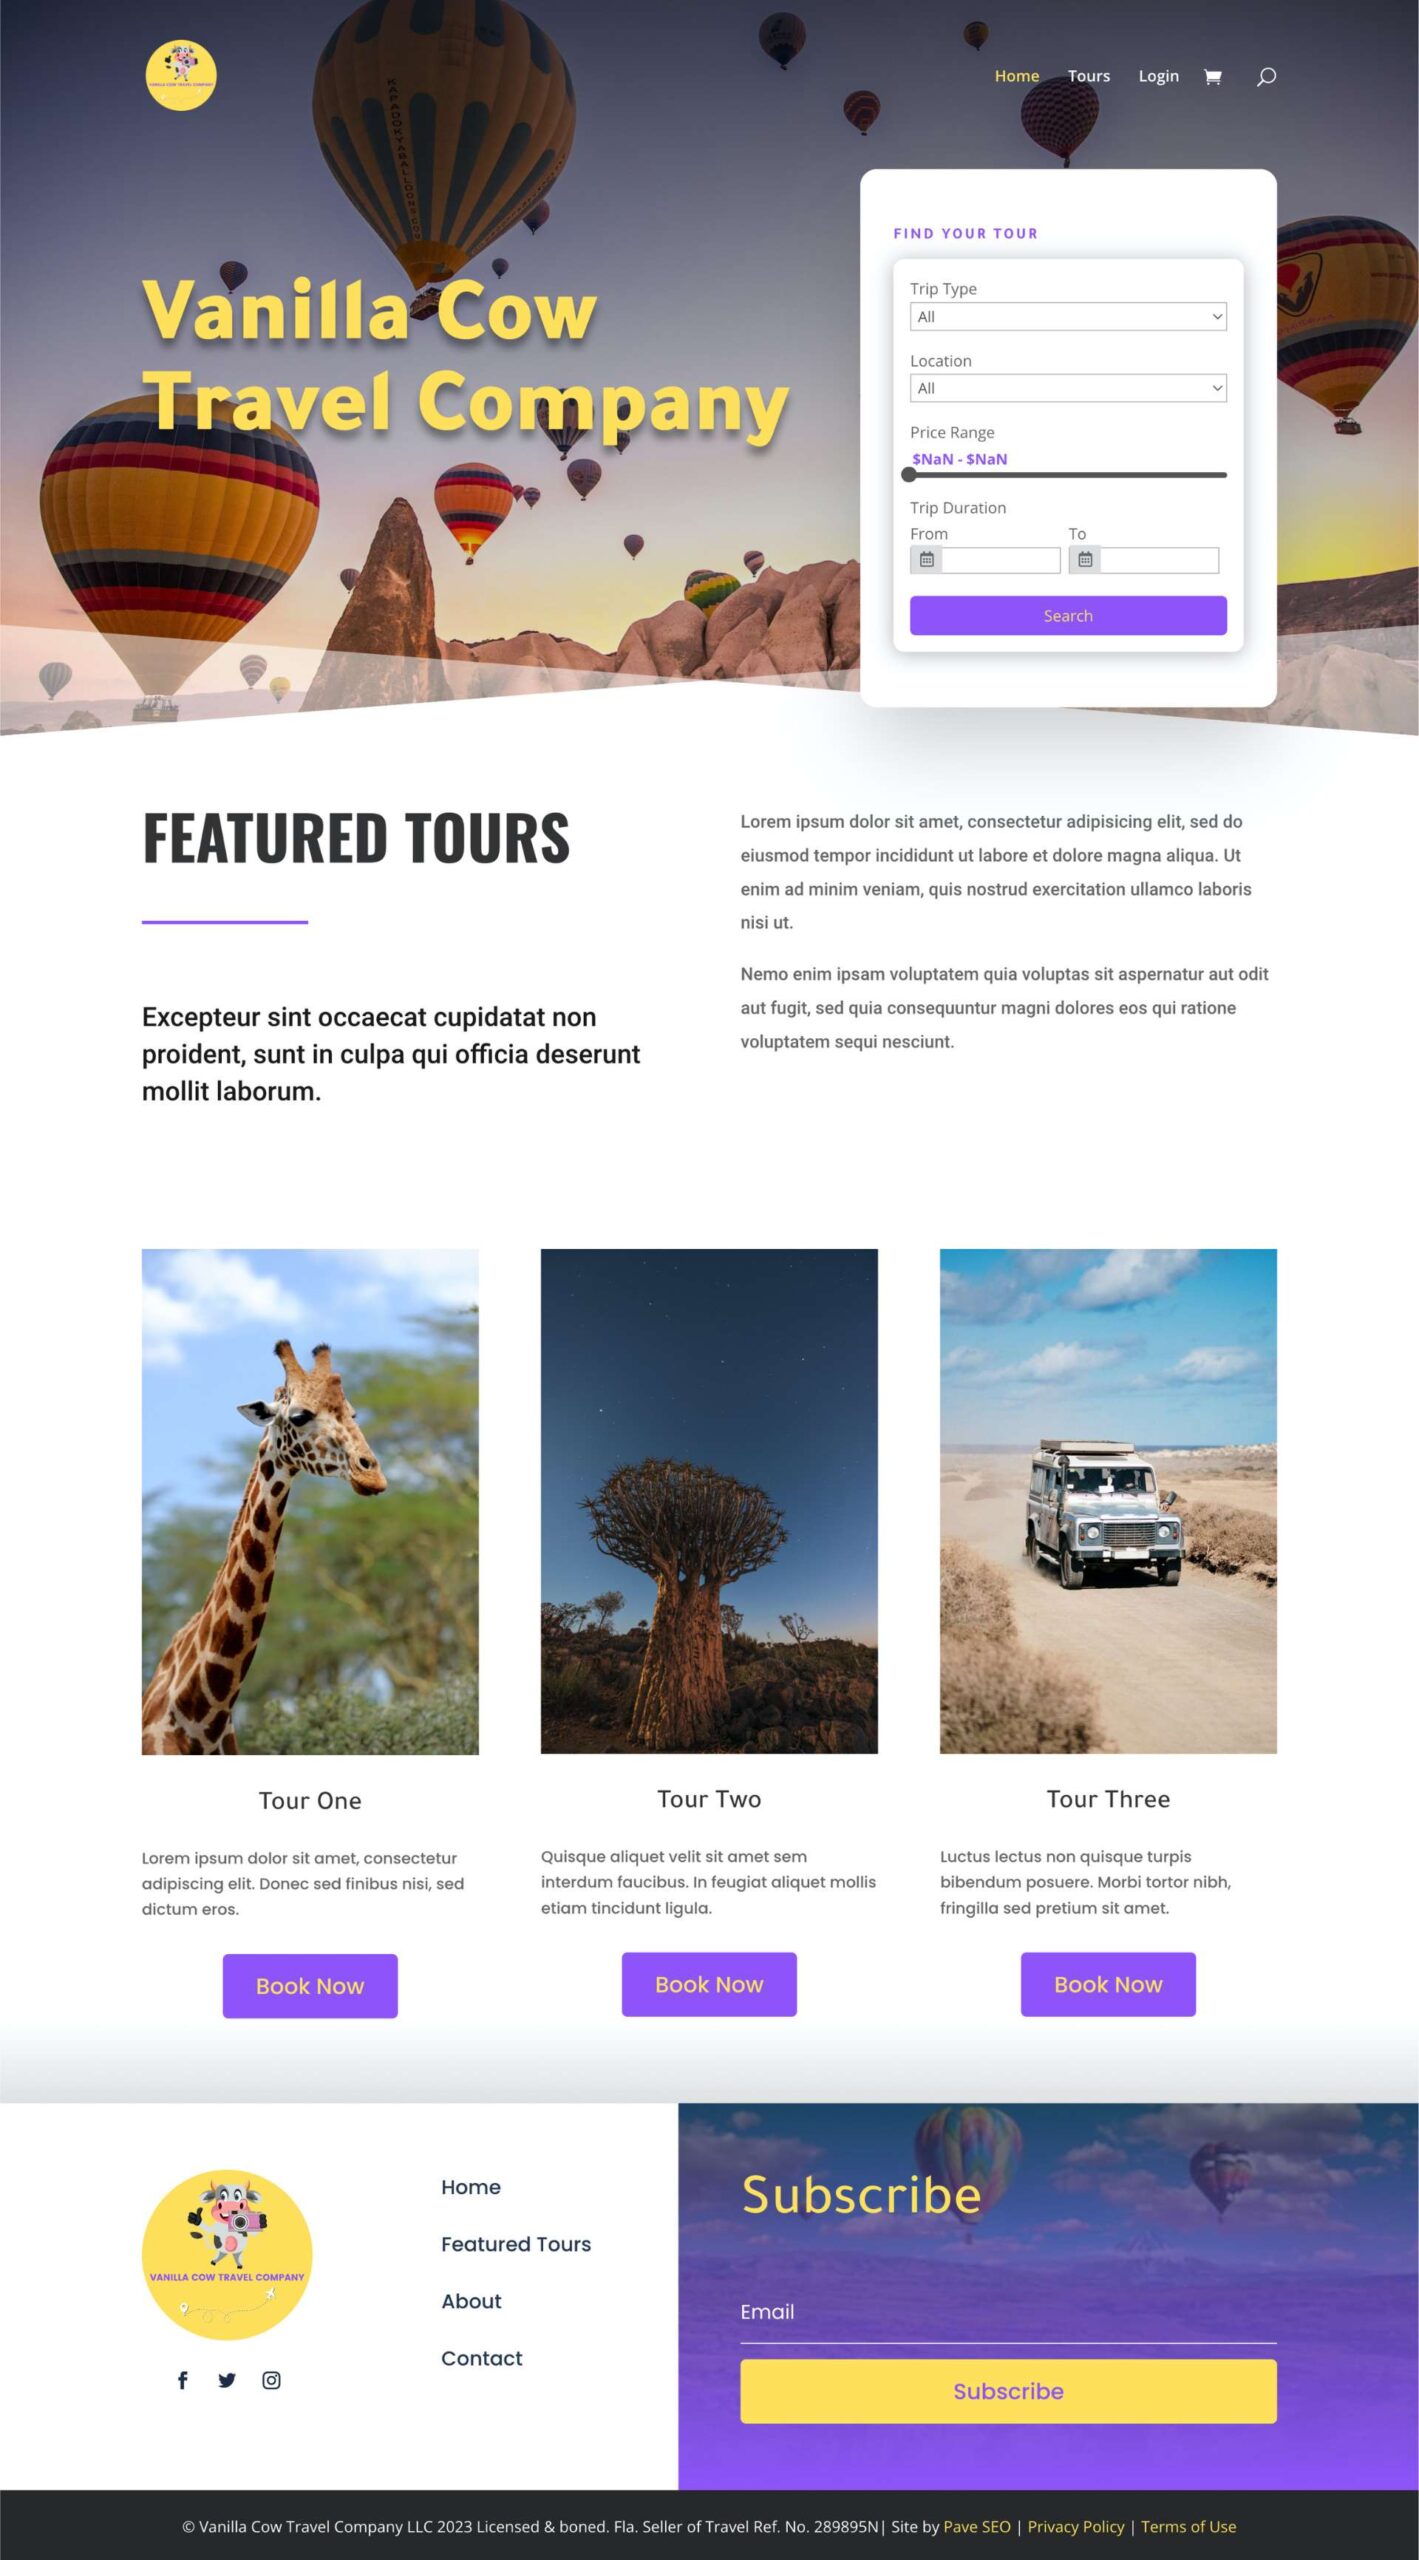 Vanilla Cow Travel Company SEO Web Design